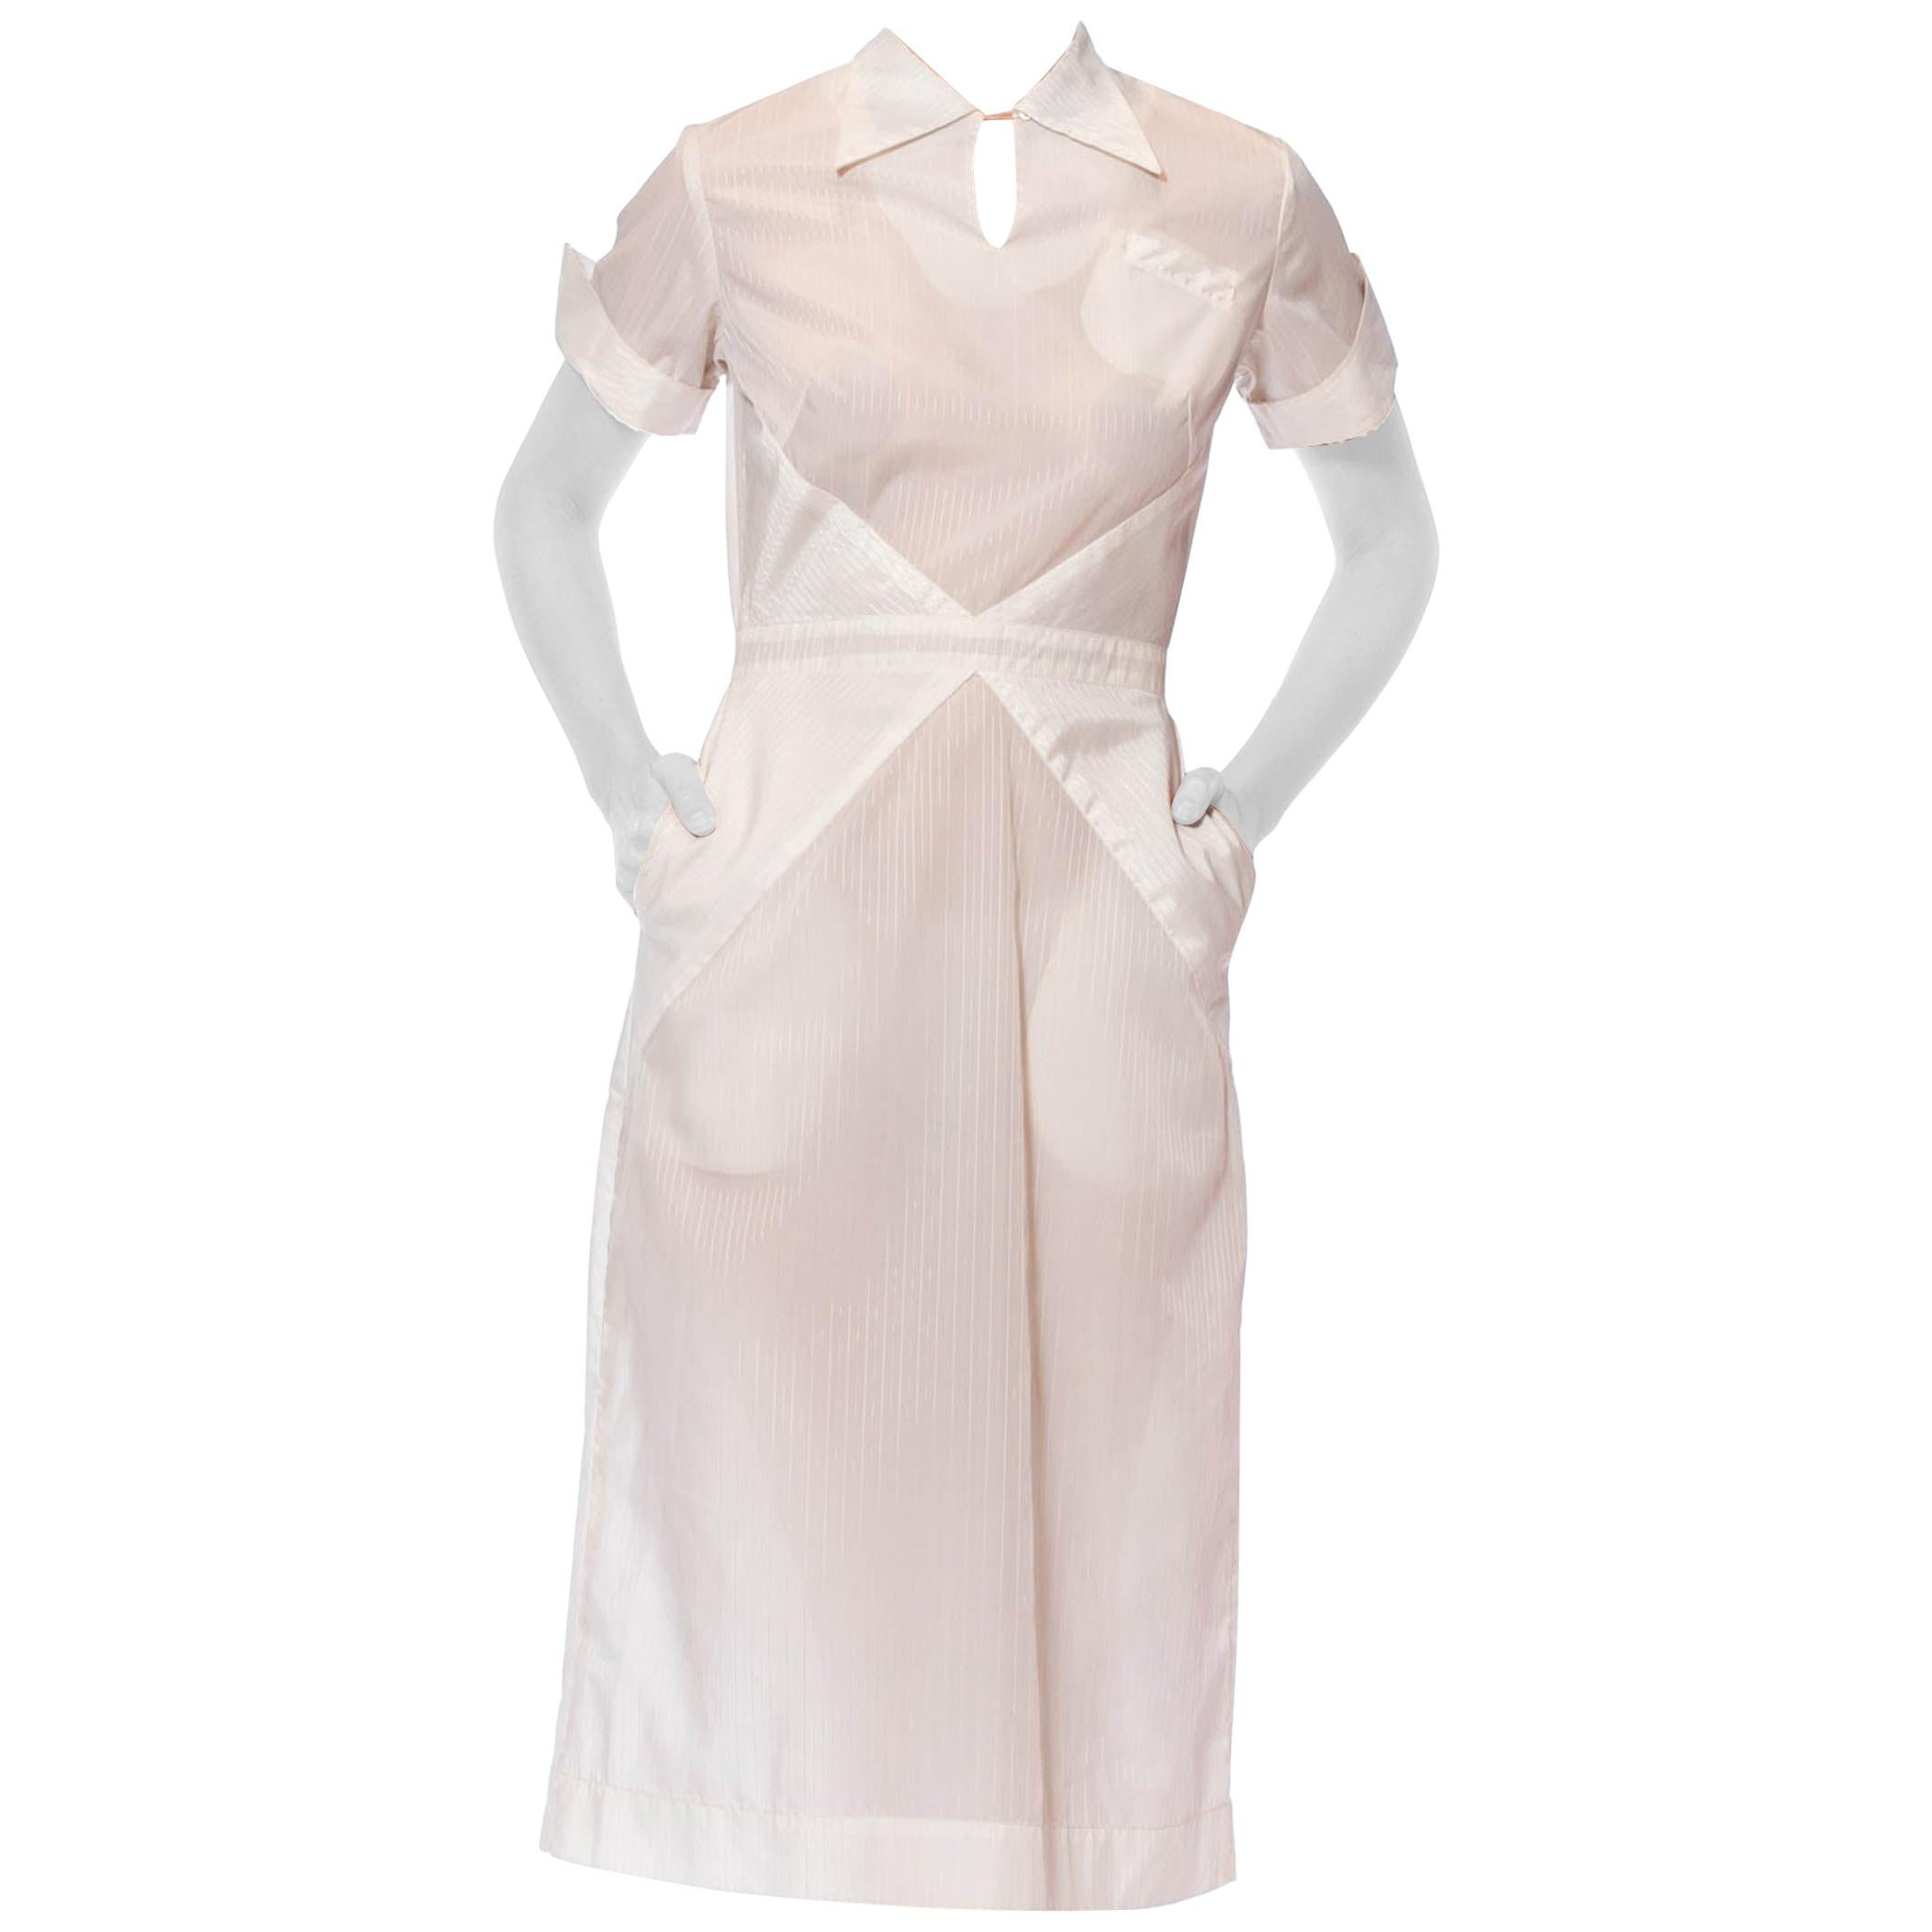 1950S White Nylon Pin-Up Nurse Uniform Dress For Sale